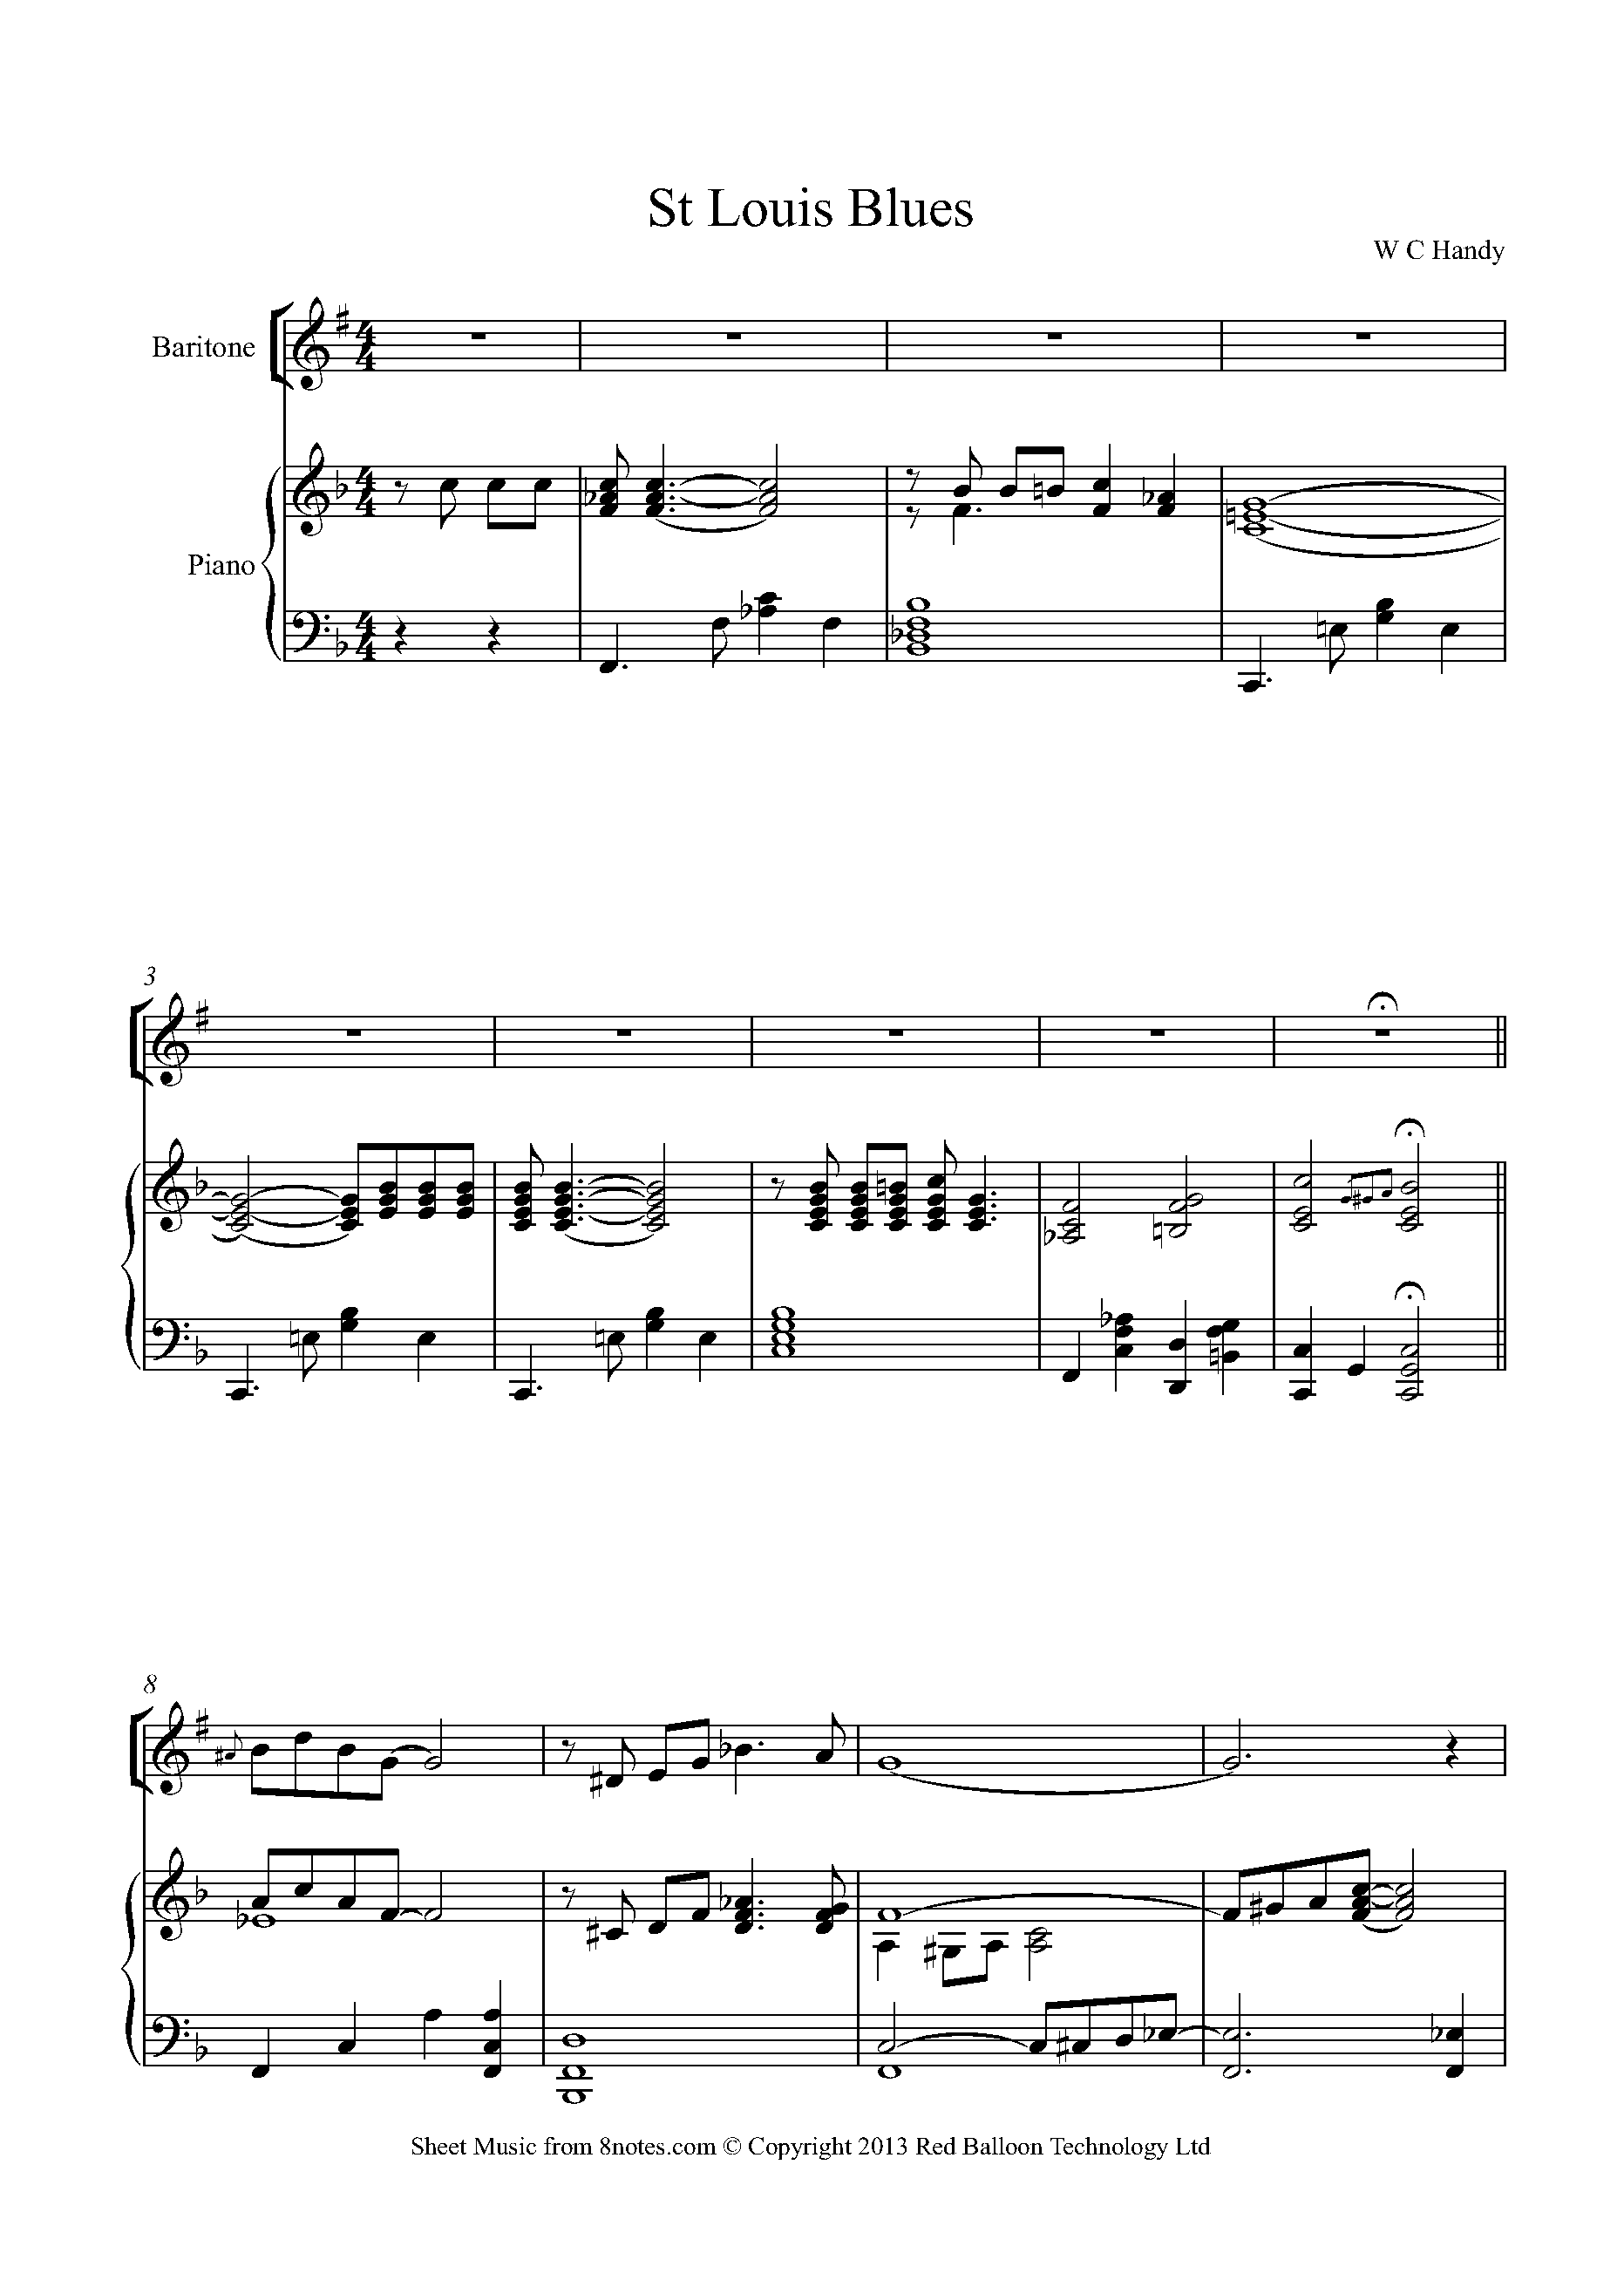 W C Handy - St Louis Blues Sheet music for Baritone Horn - 8notes.com